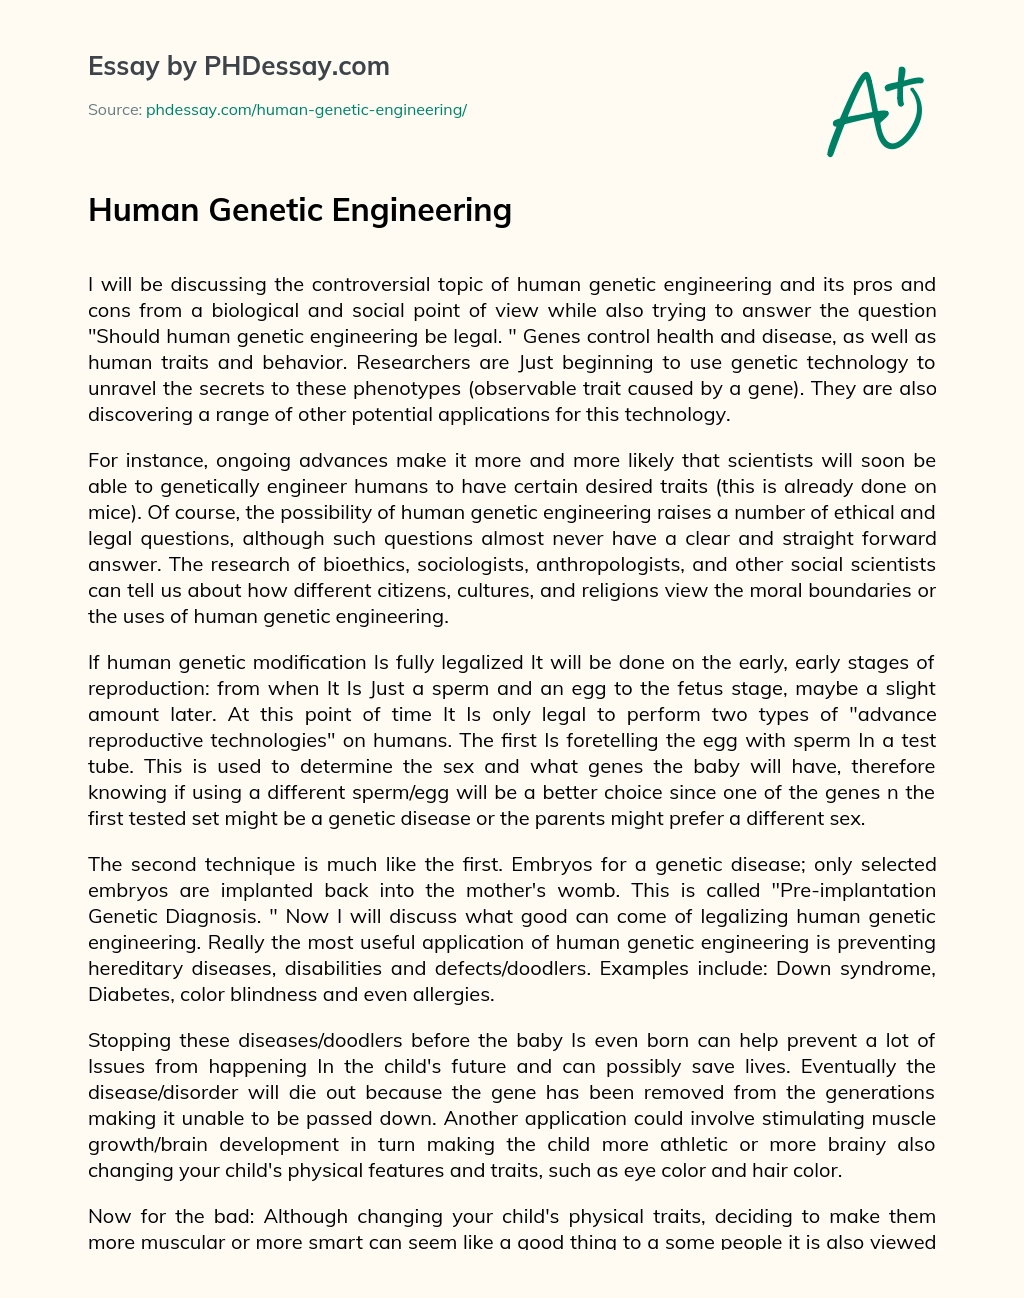 Human Genetic Engineering essay